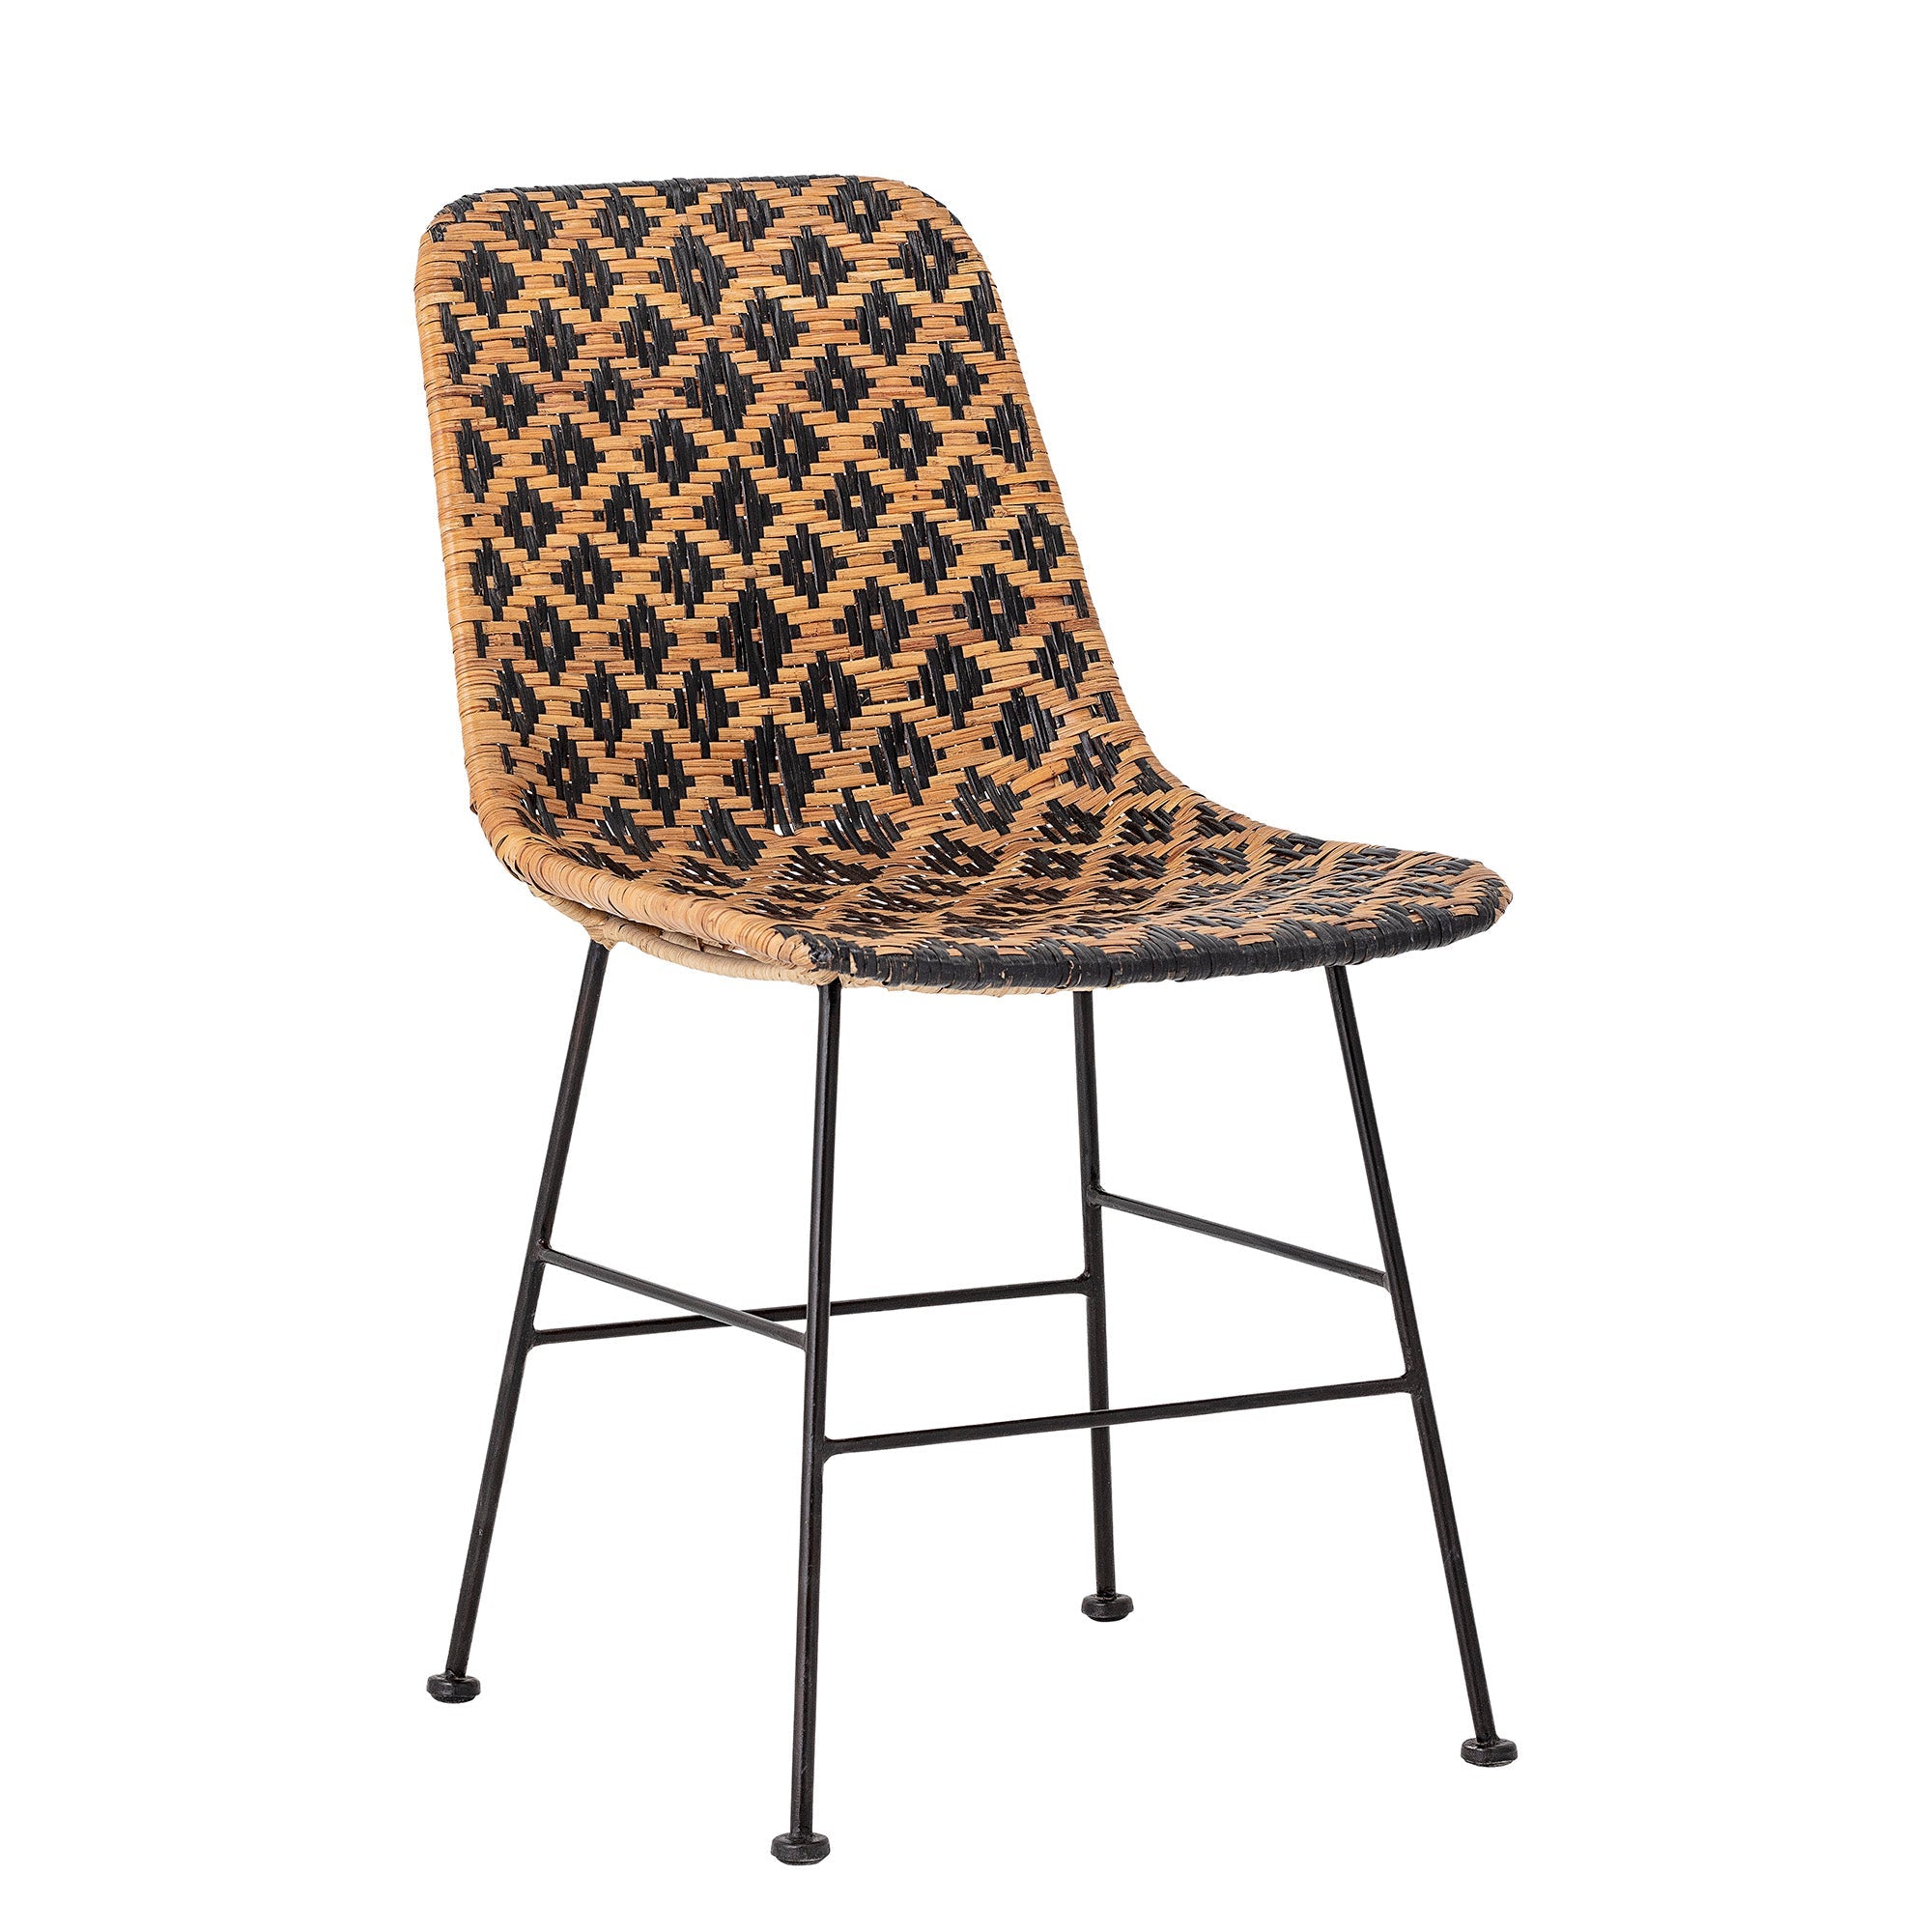 Rattan chair KITT with black design, Bloomingville, Eye on Design